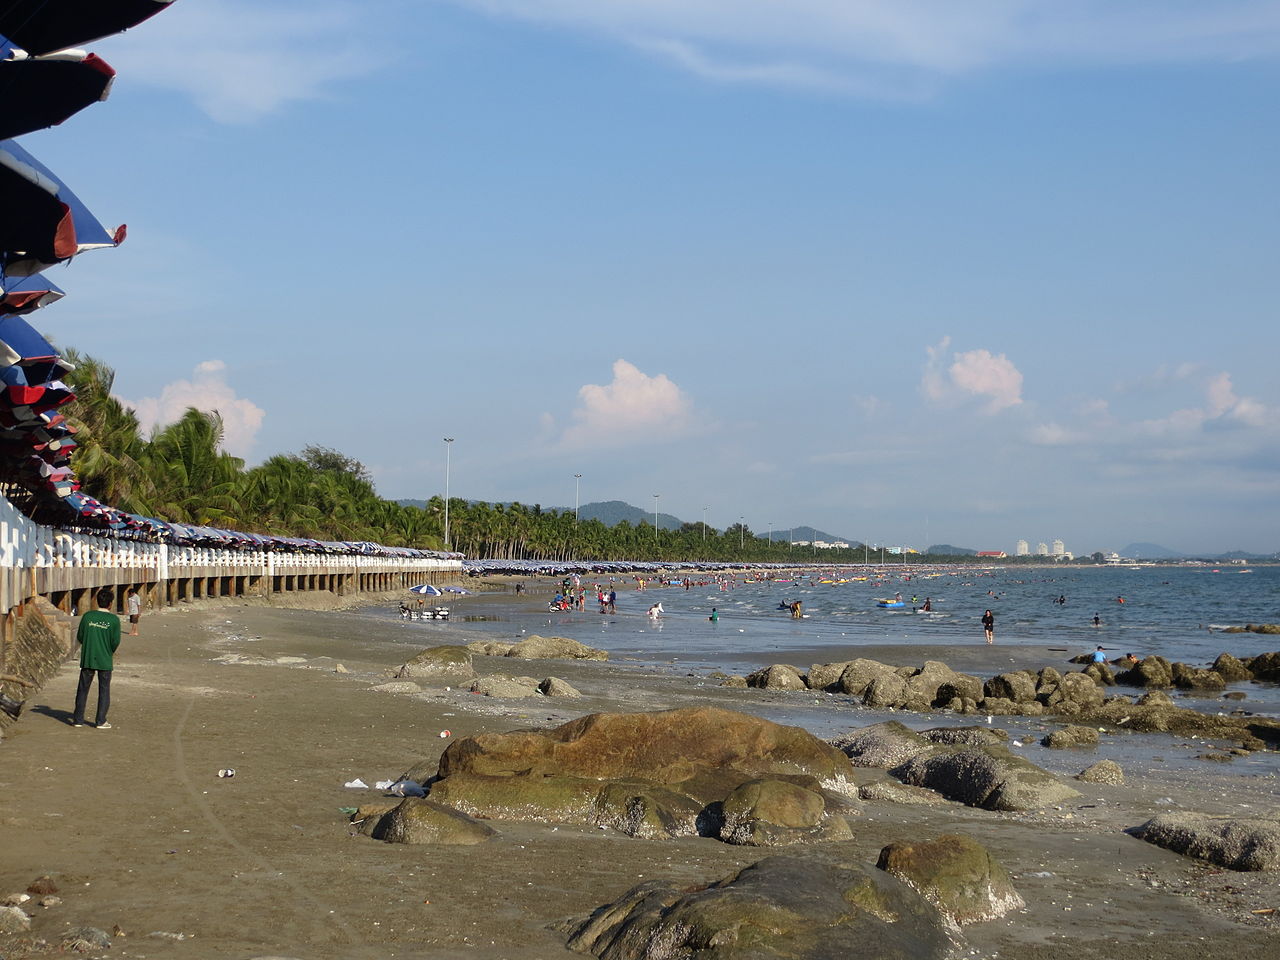 Bang Saen beach in Chonburi province